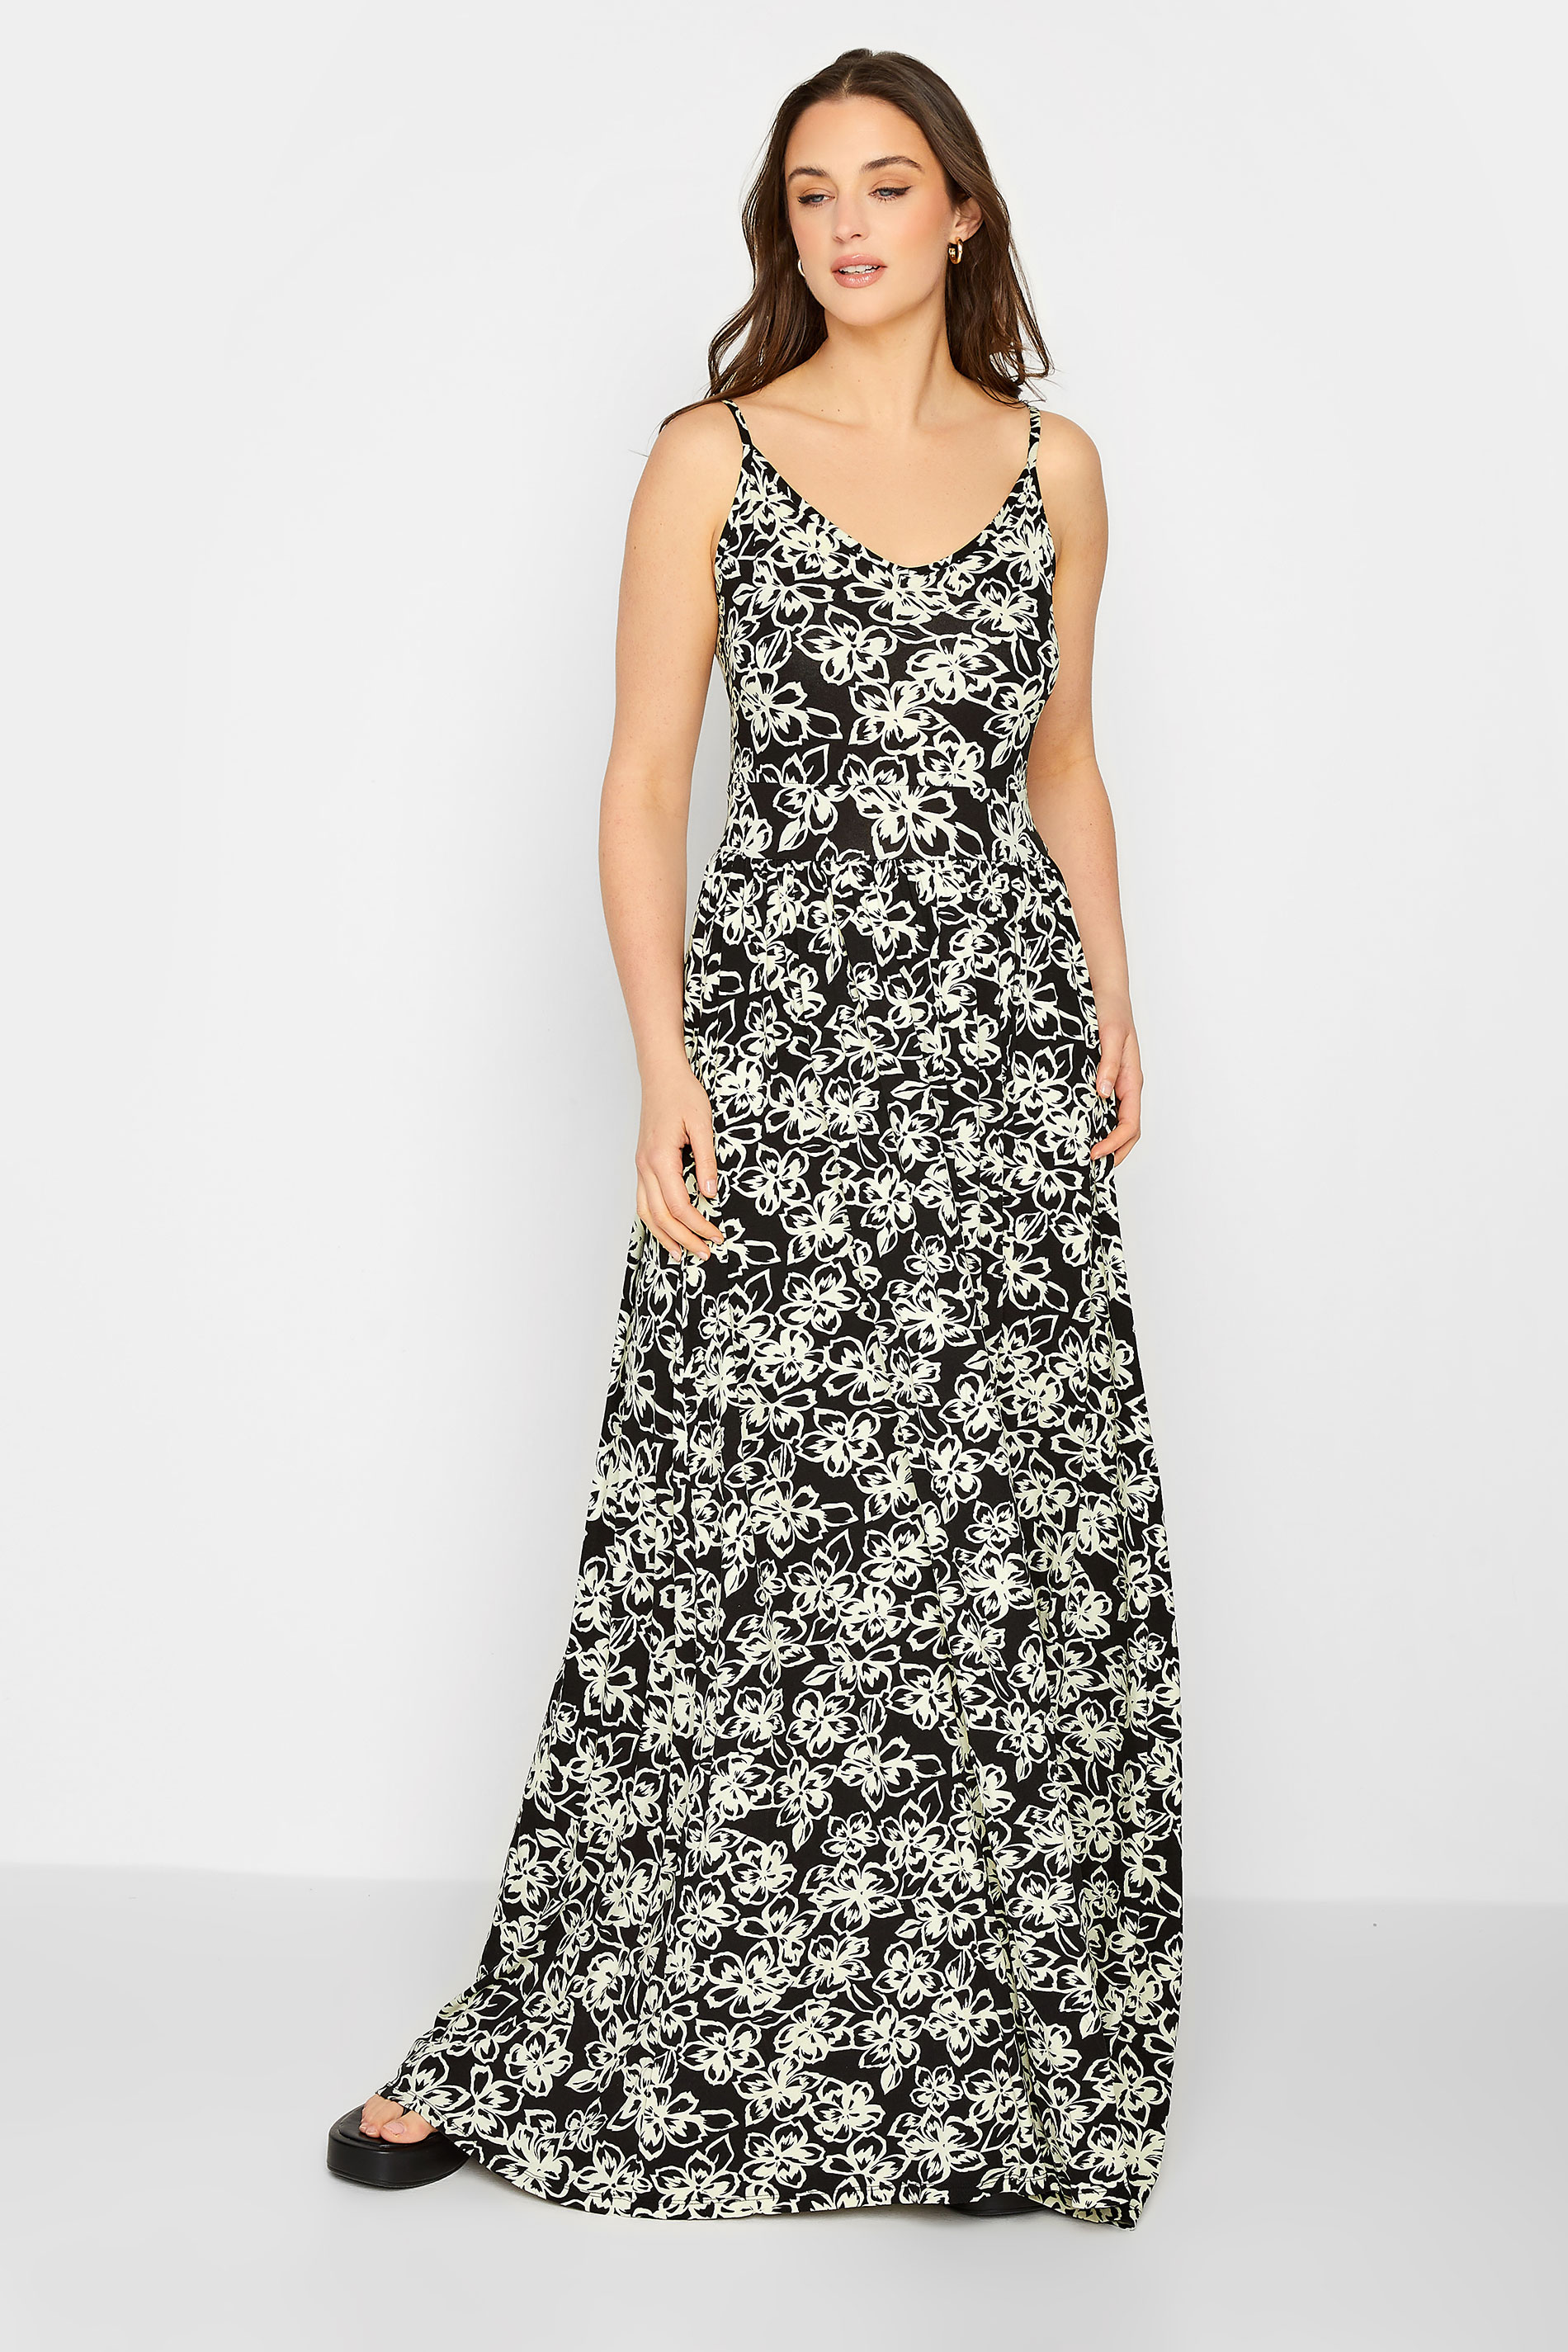 LTS Tall Women's Black Floral Strappy Maxi Dress | Long Tall Sally 2